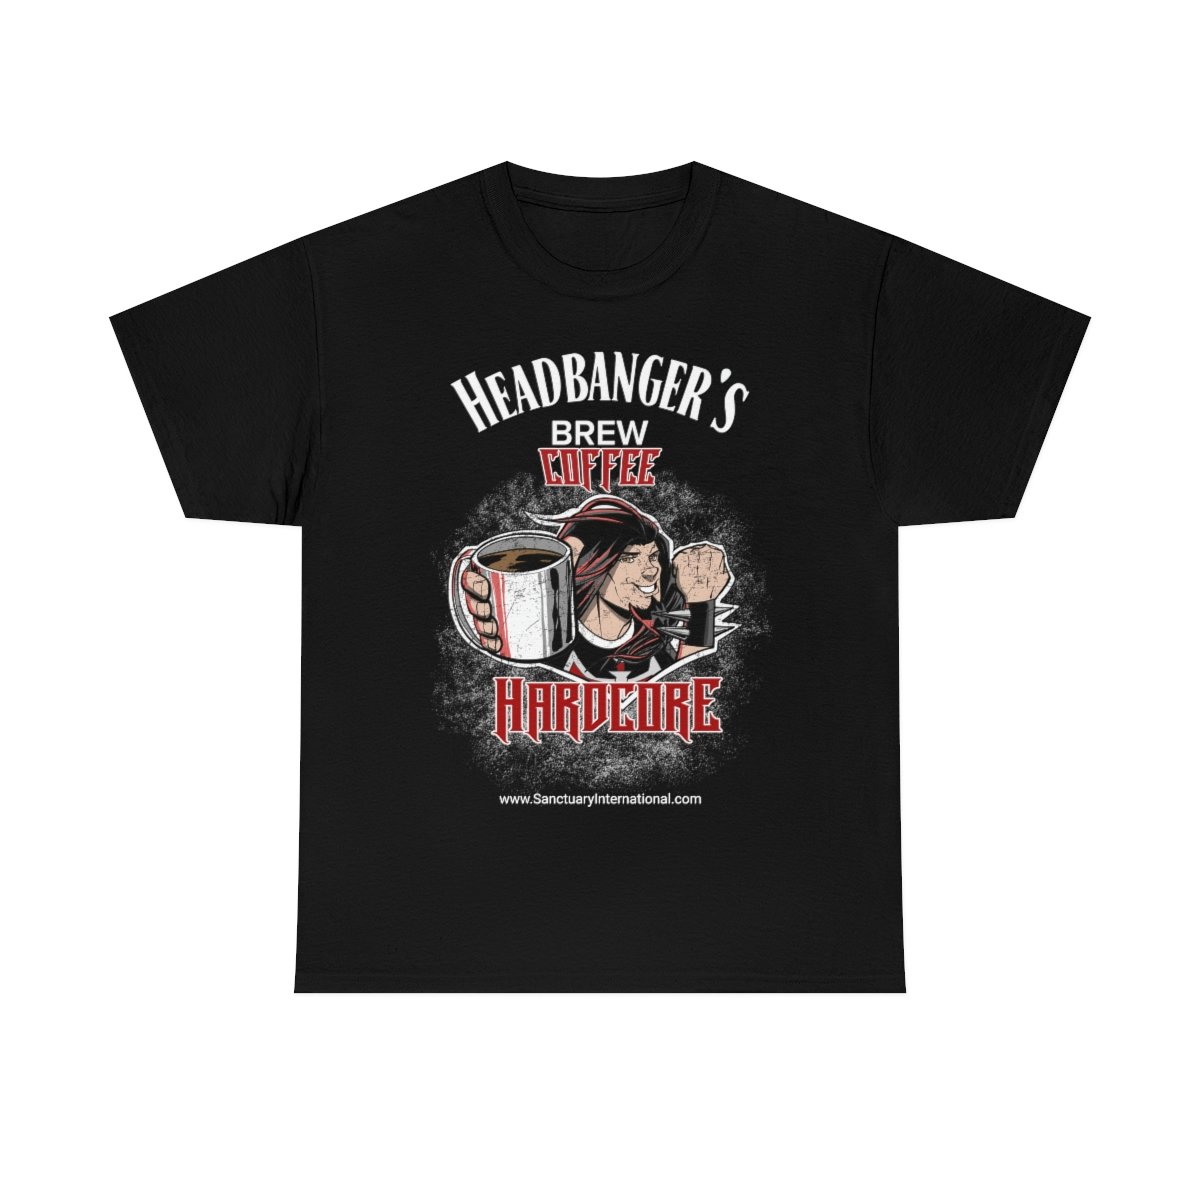 Headbanger’s Brew – Hardcore Short Sleeve Tshirt